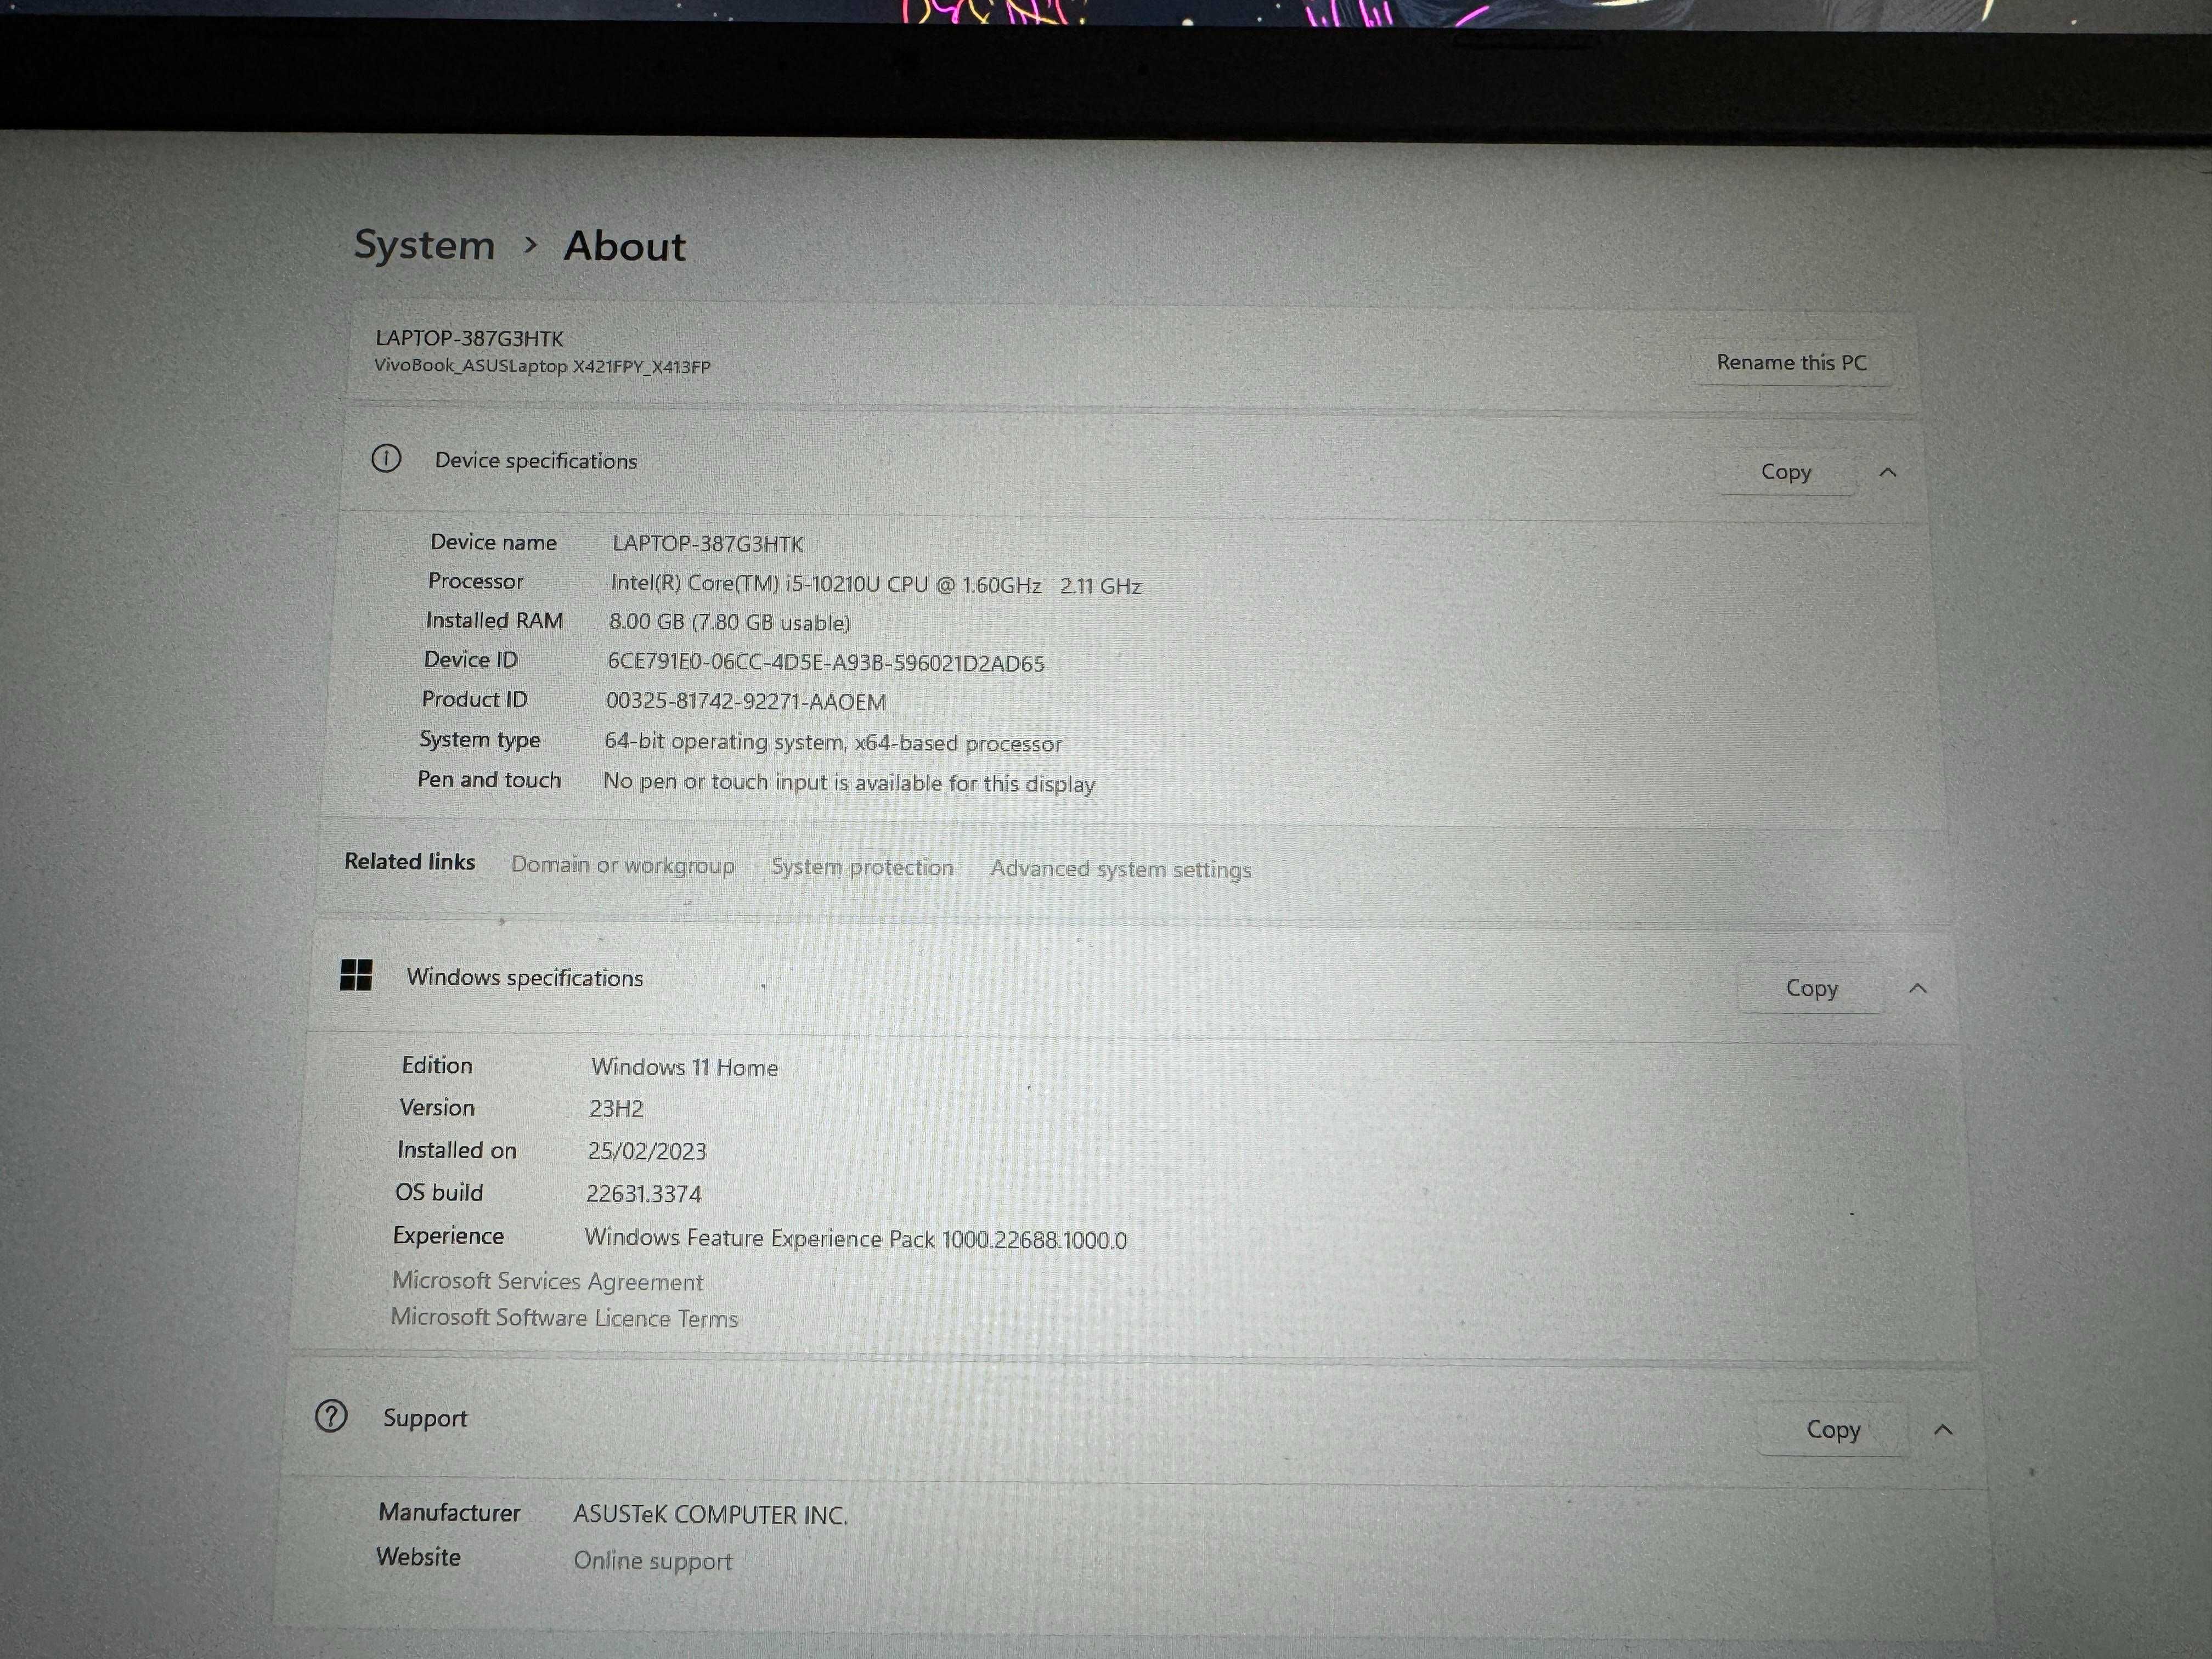 Laptop Asus VivoBook 14 inch i5 10210U (X413FP)